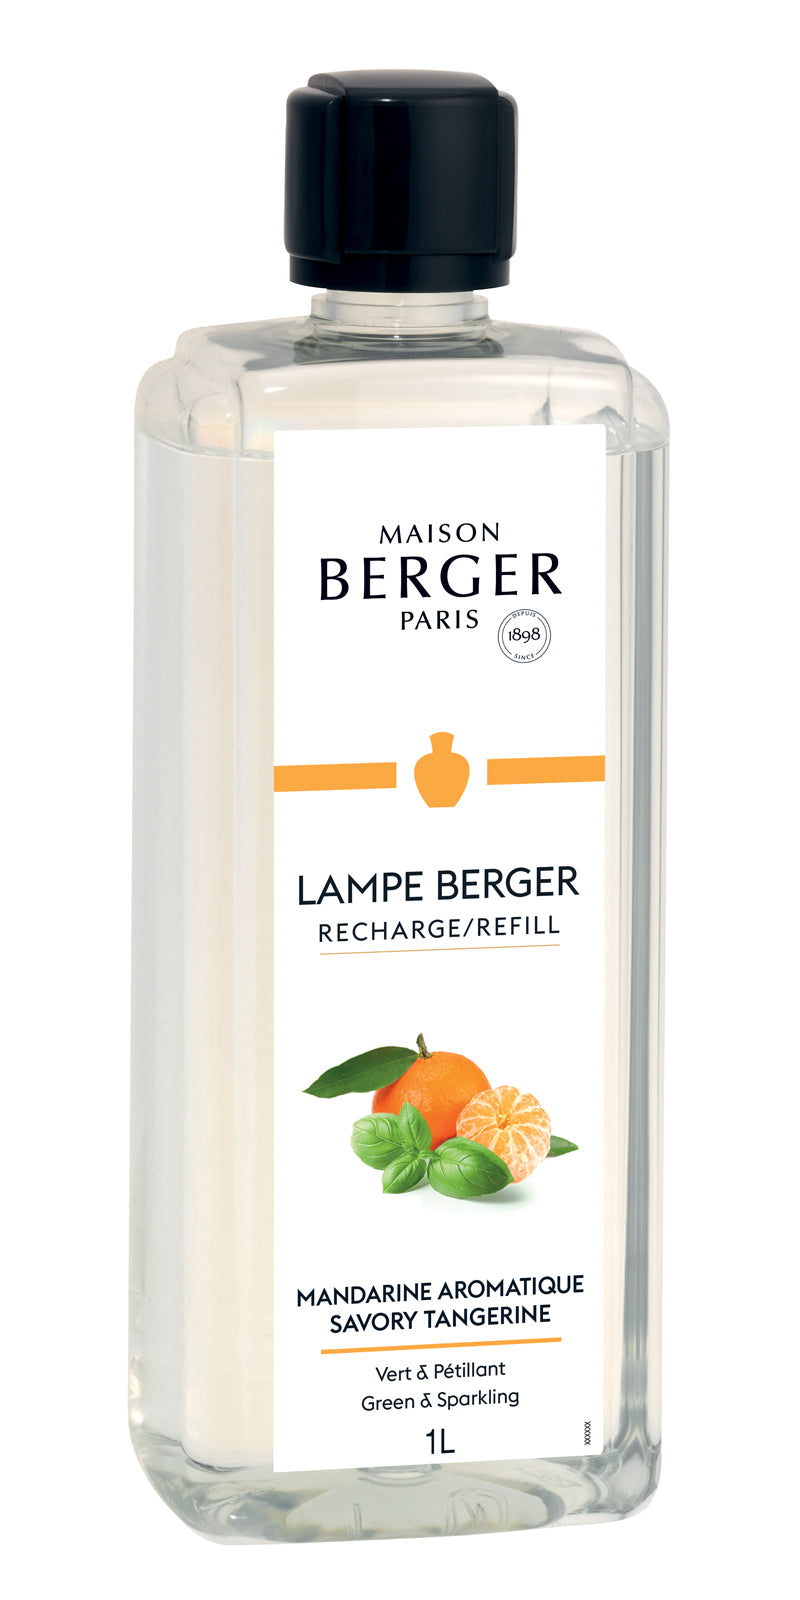 Lampe Berger Duft Spitzige Mandarine 1000 ml von Maison Berger